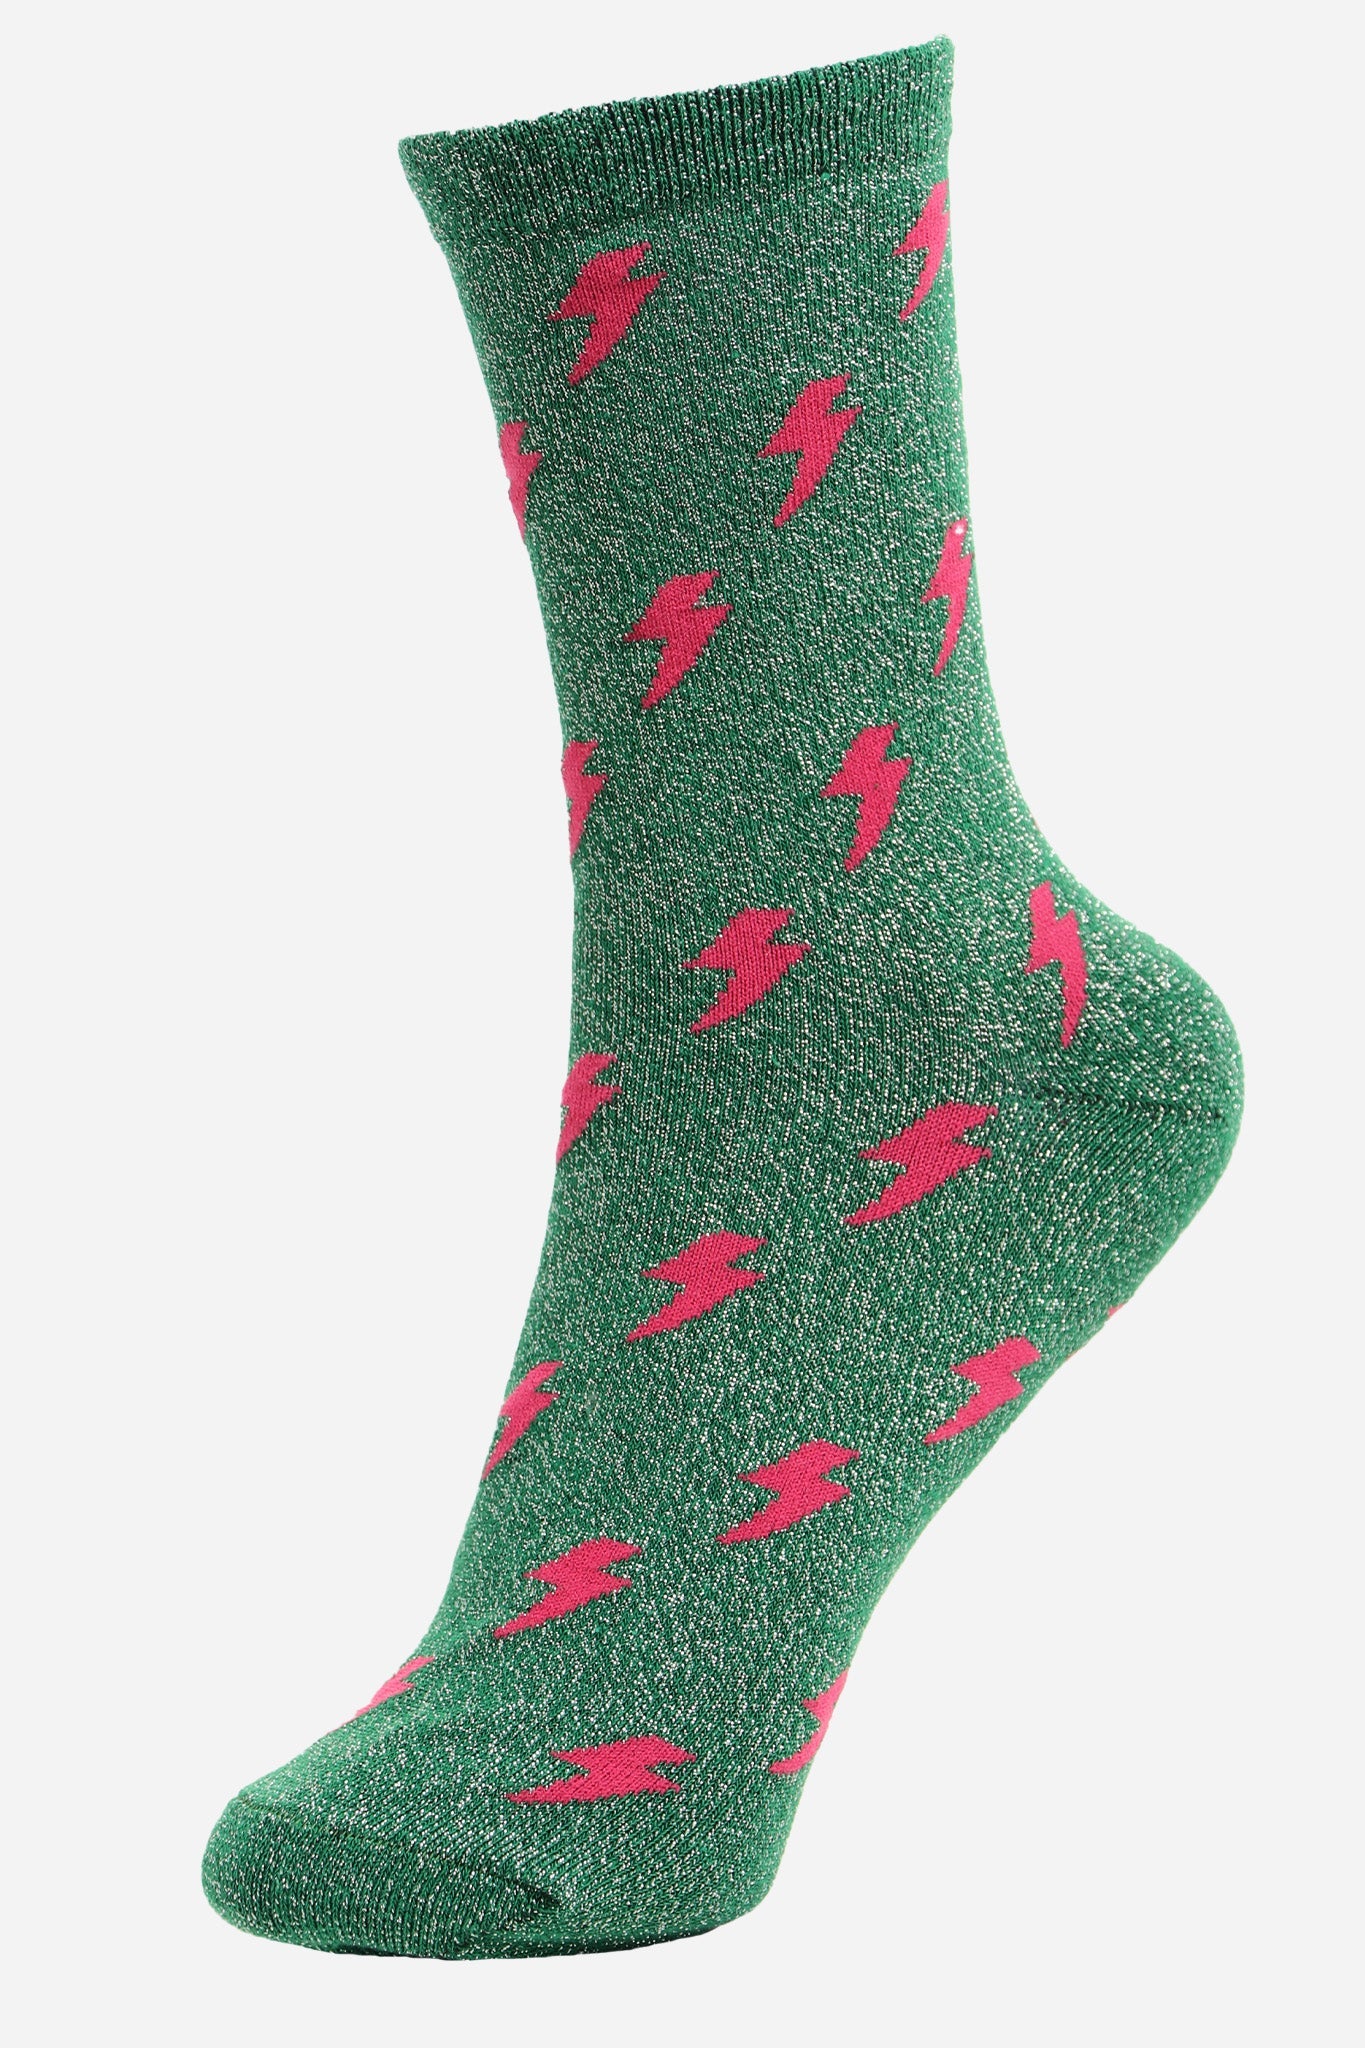 Glitter Socks - Green/Pink Lightening